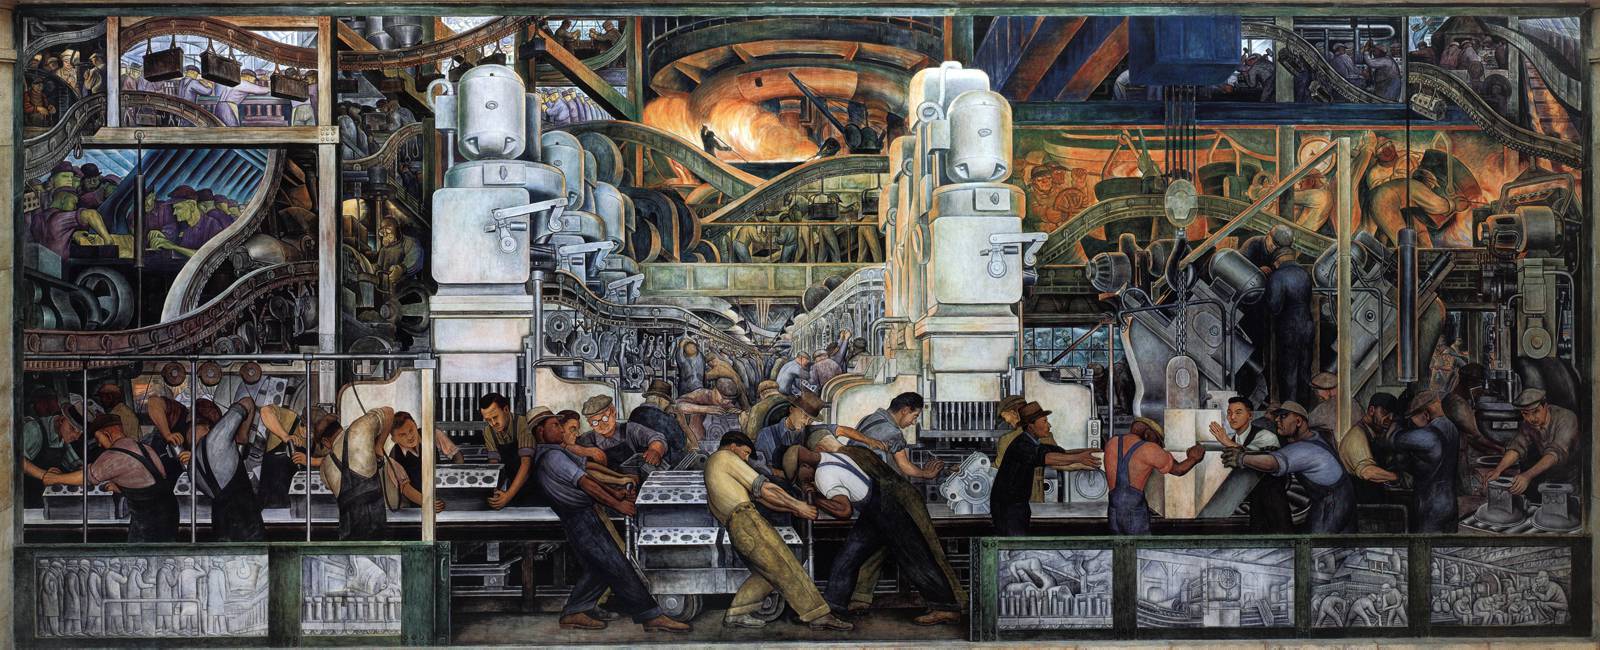 Detroit Industry, North Wall fresco by Diego M. Rivera